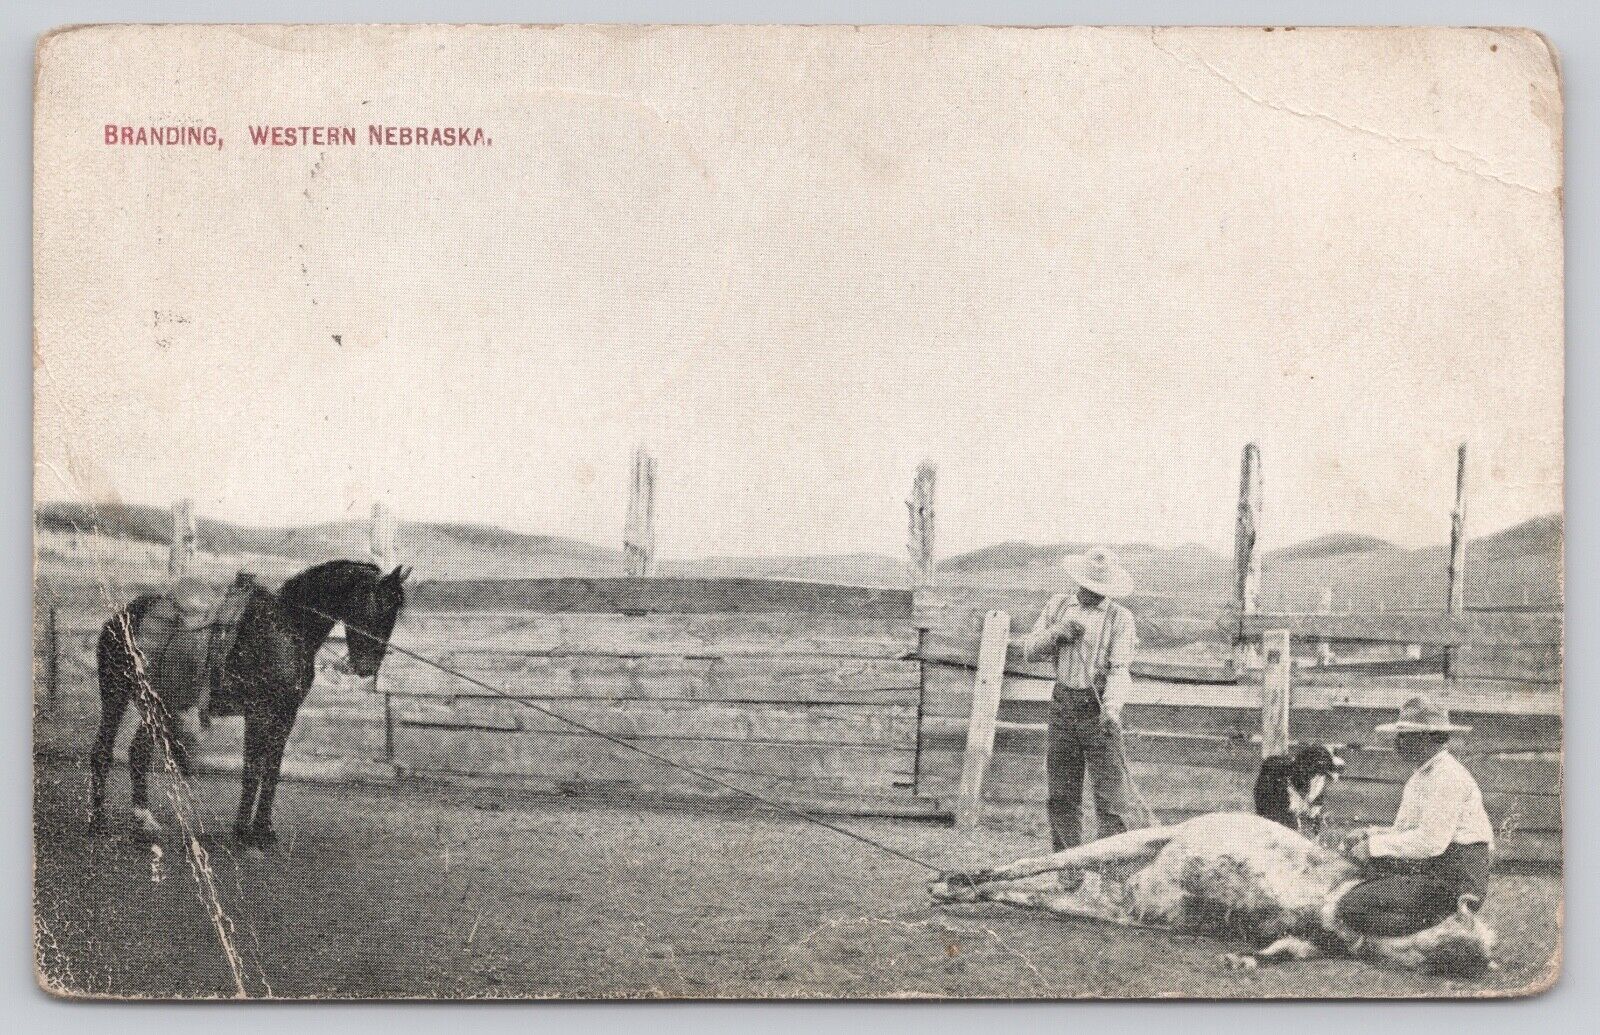 BRANDING CATTLE IN WESTERN NEBRASKA, VINTAGE POSTCARD c. 1910 NE